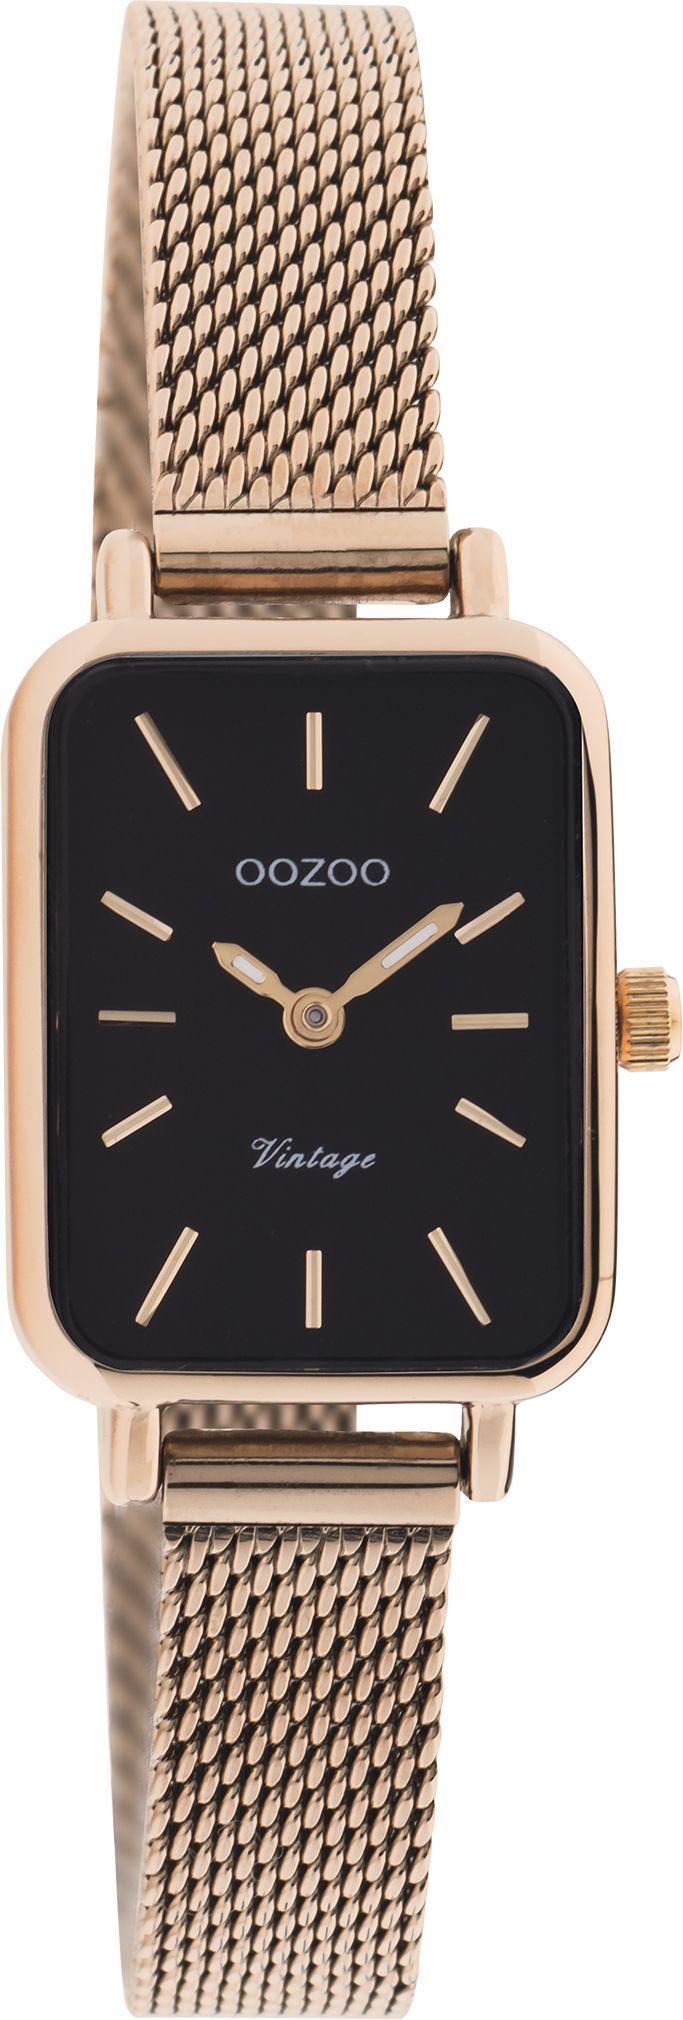 OOZOO Vintage C20270 dorato in oro rosa